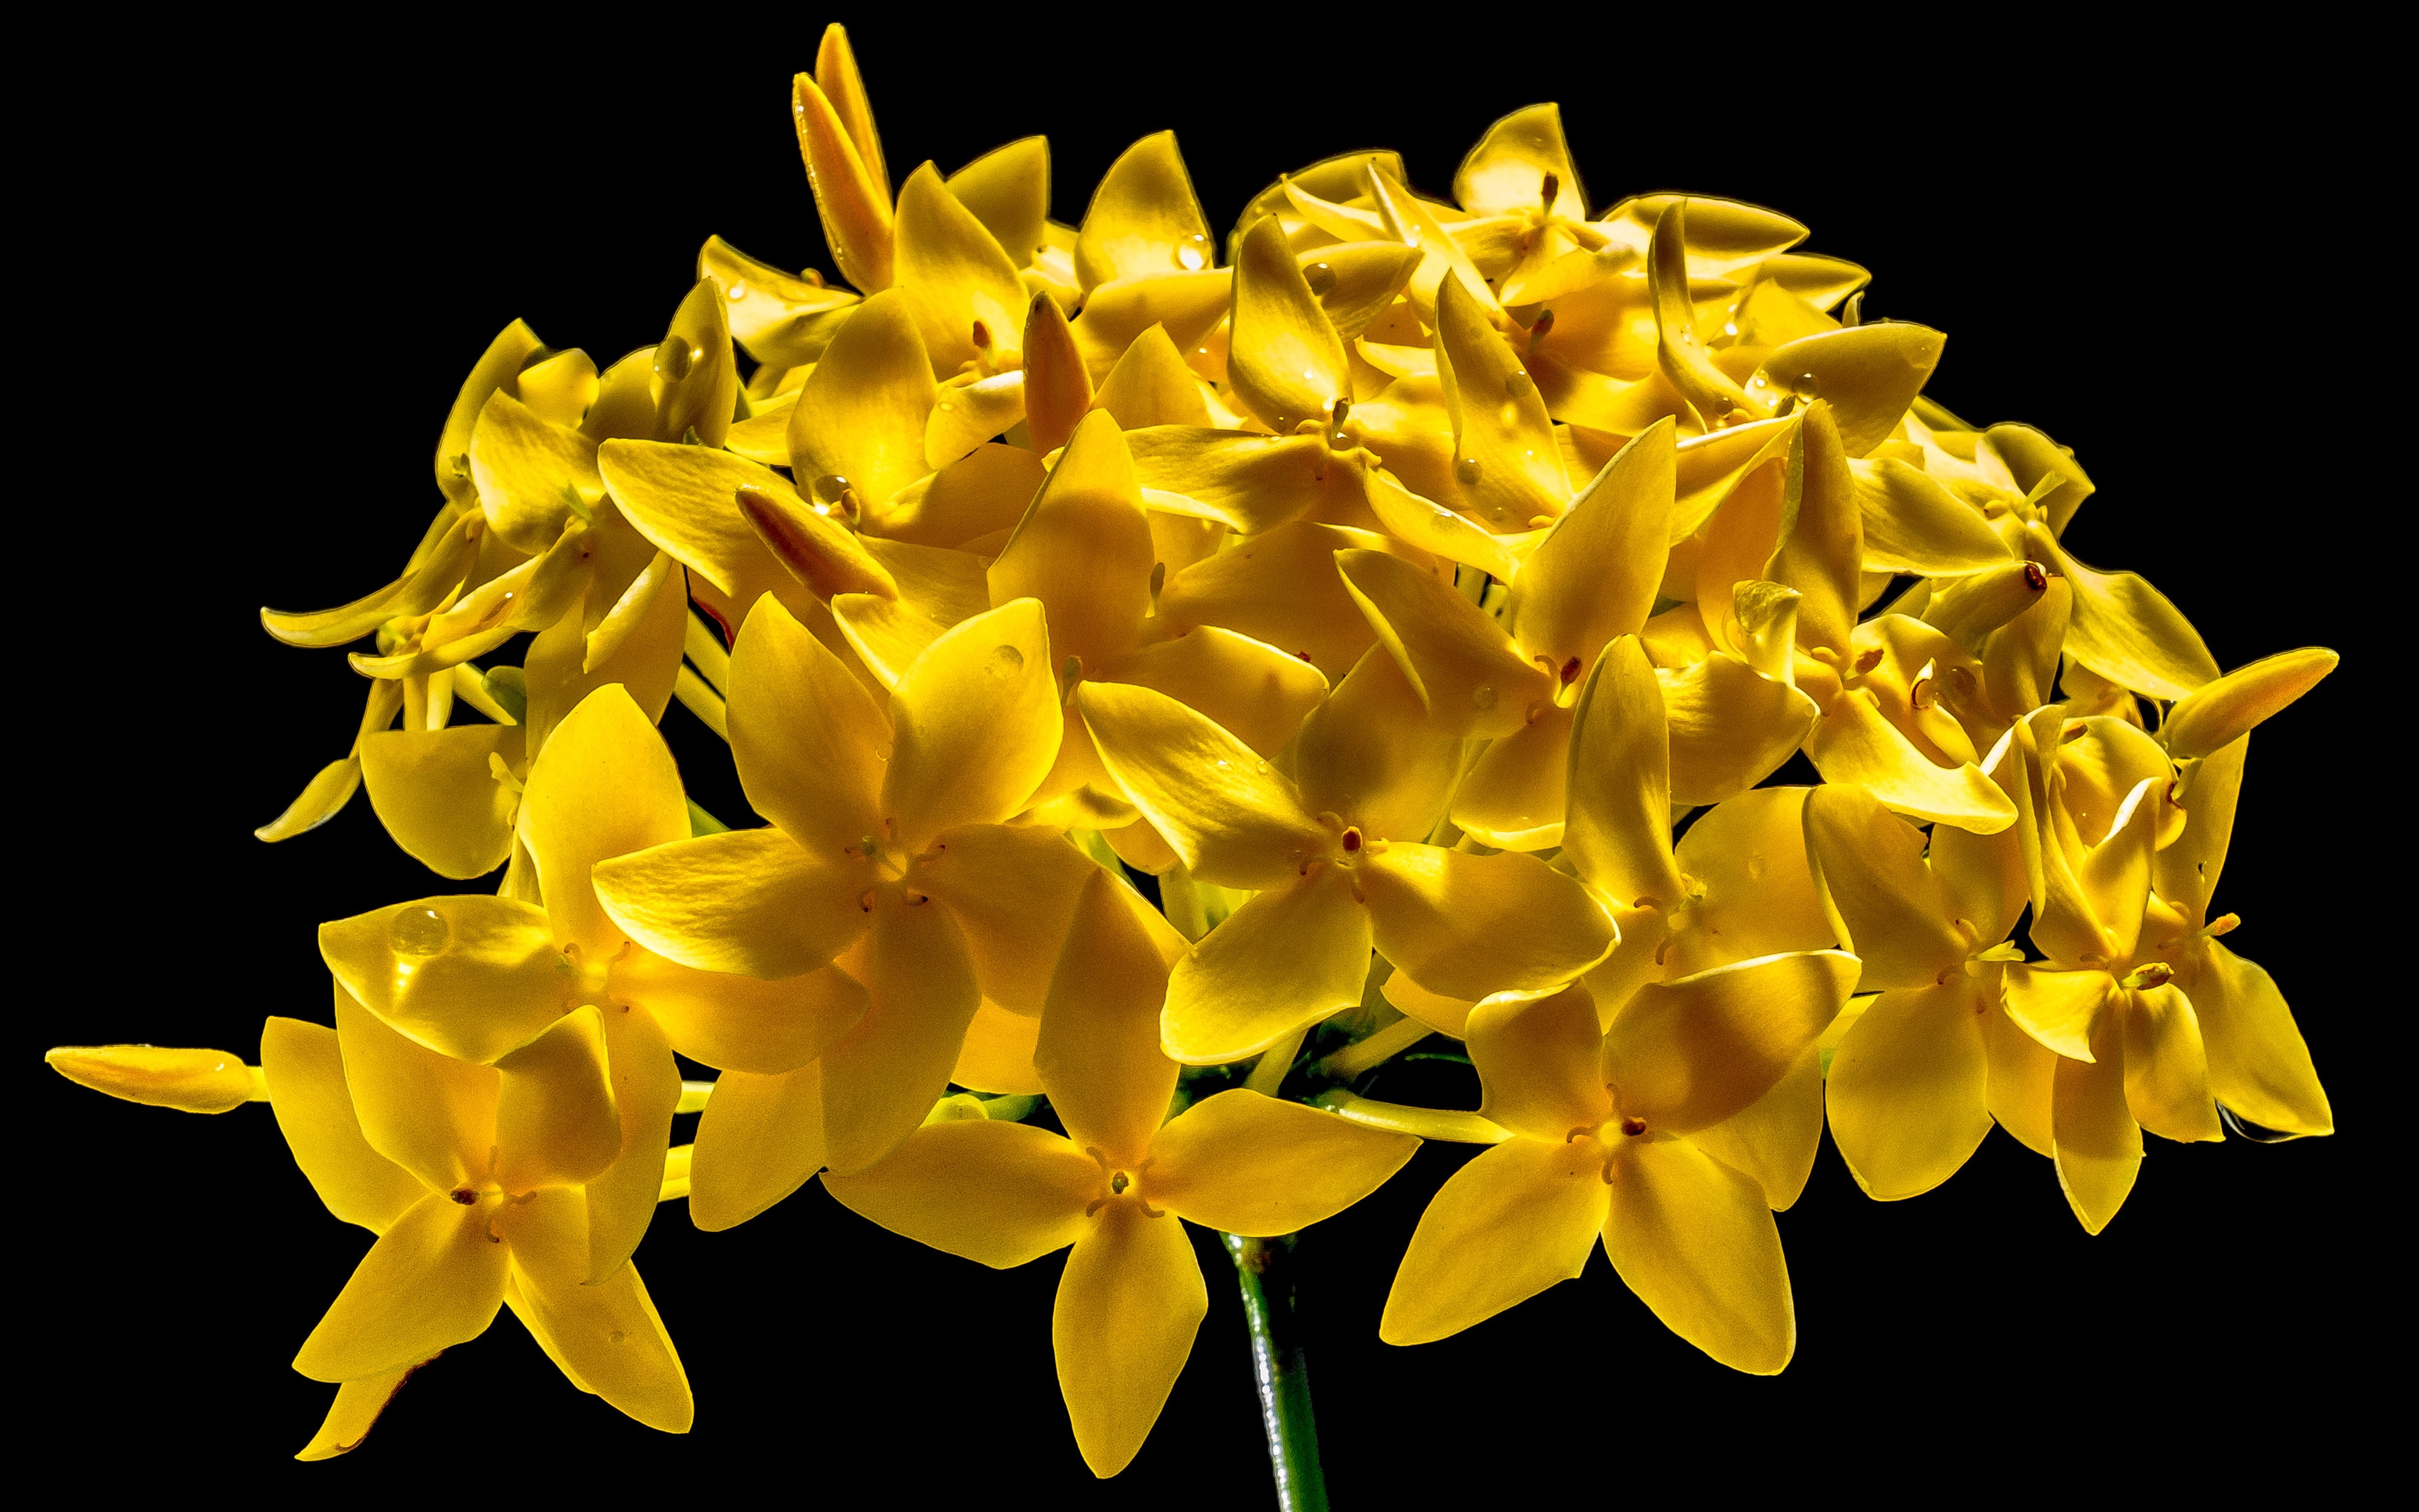 Yellow 5 petal flower photo